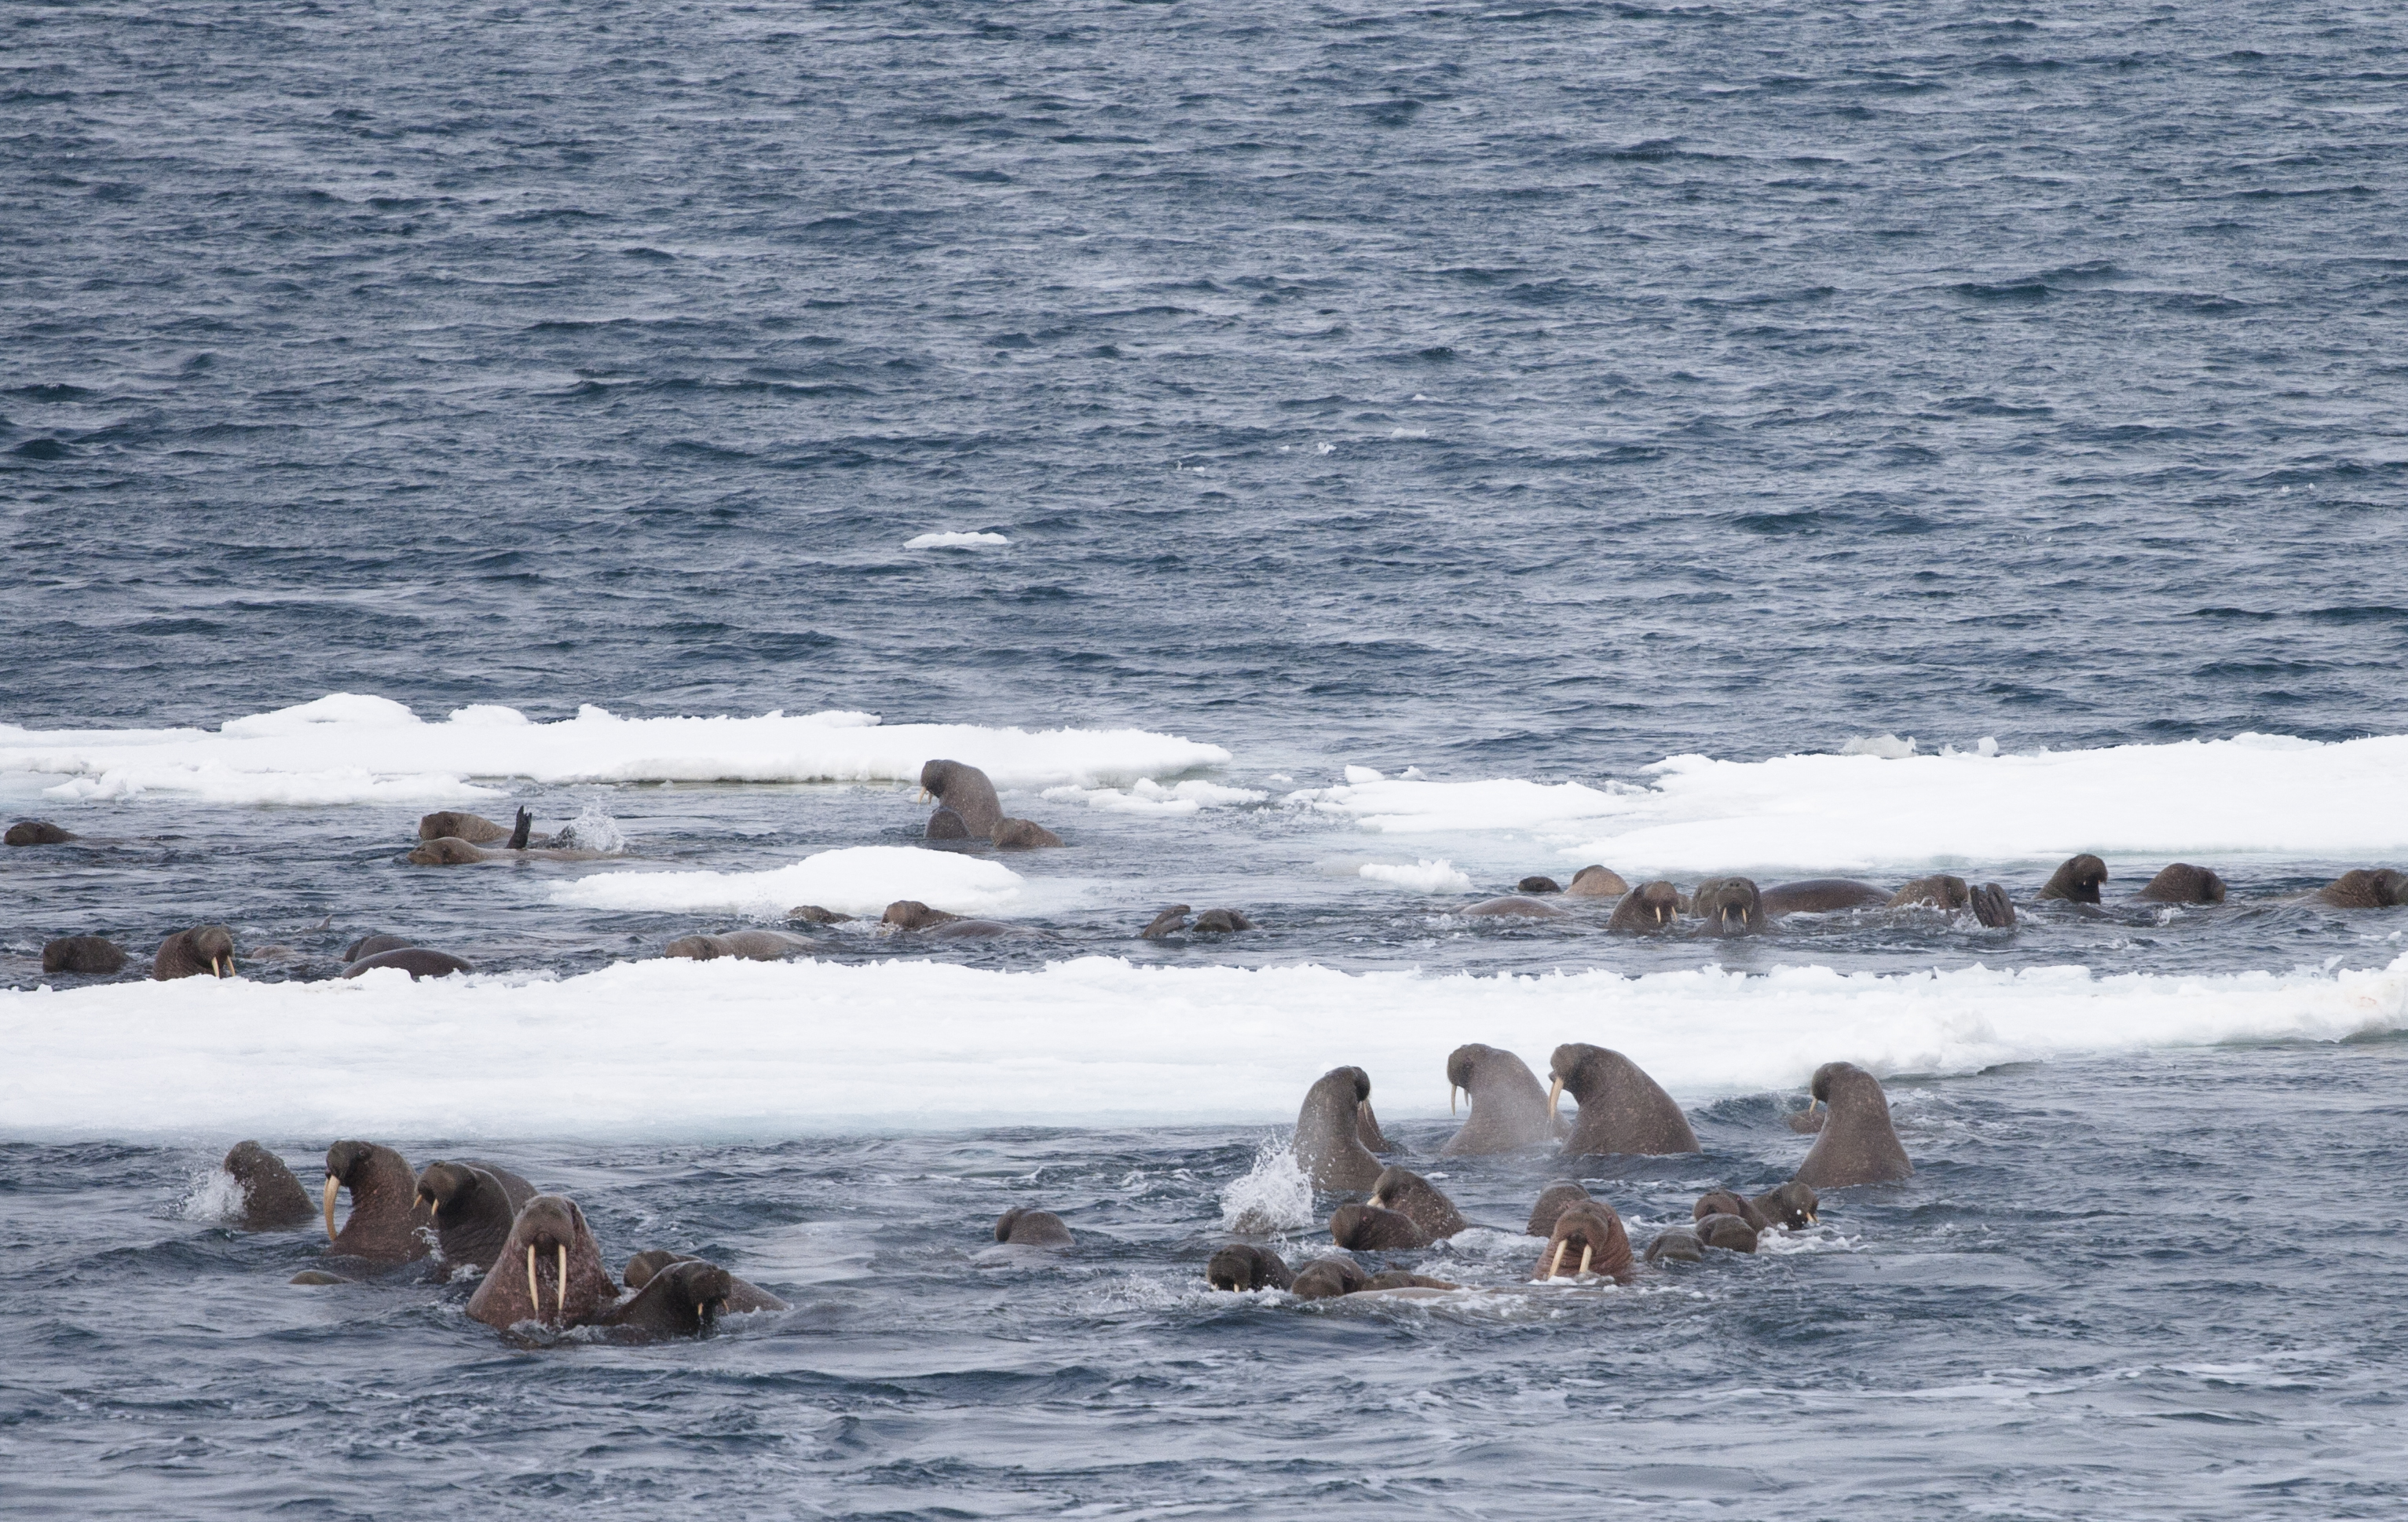 a gathering of Pacific sea walruses congregating near sea ice in the Bering Sea